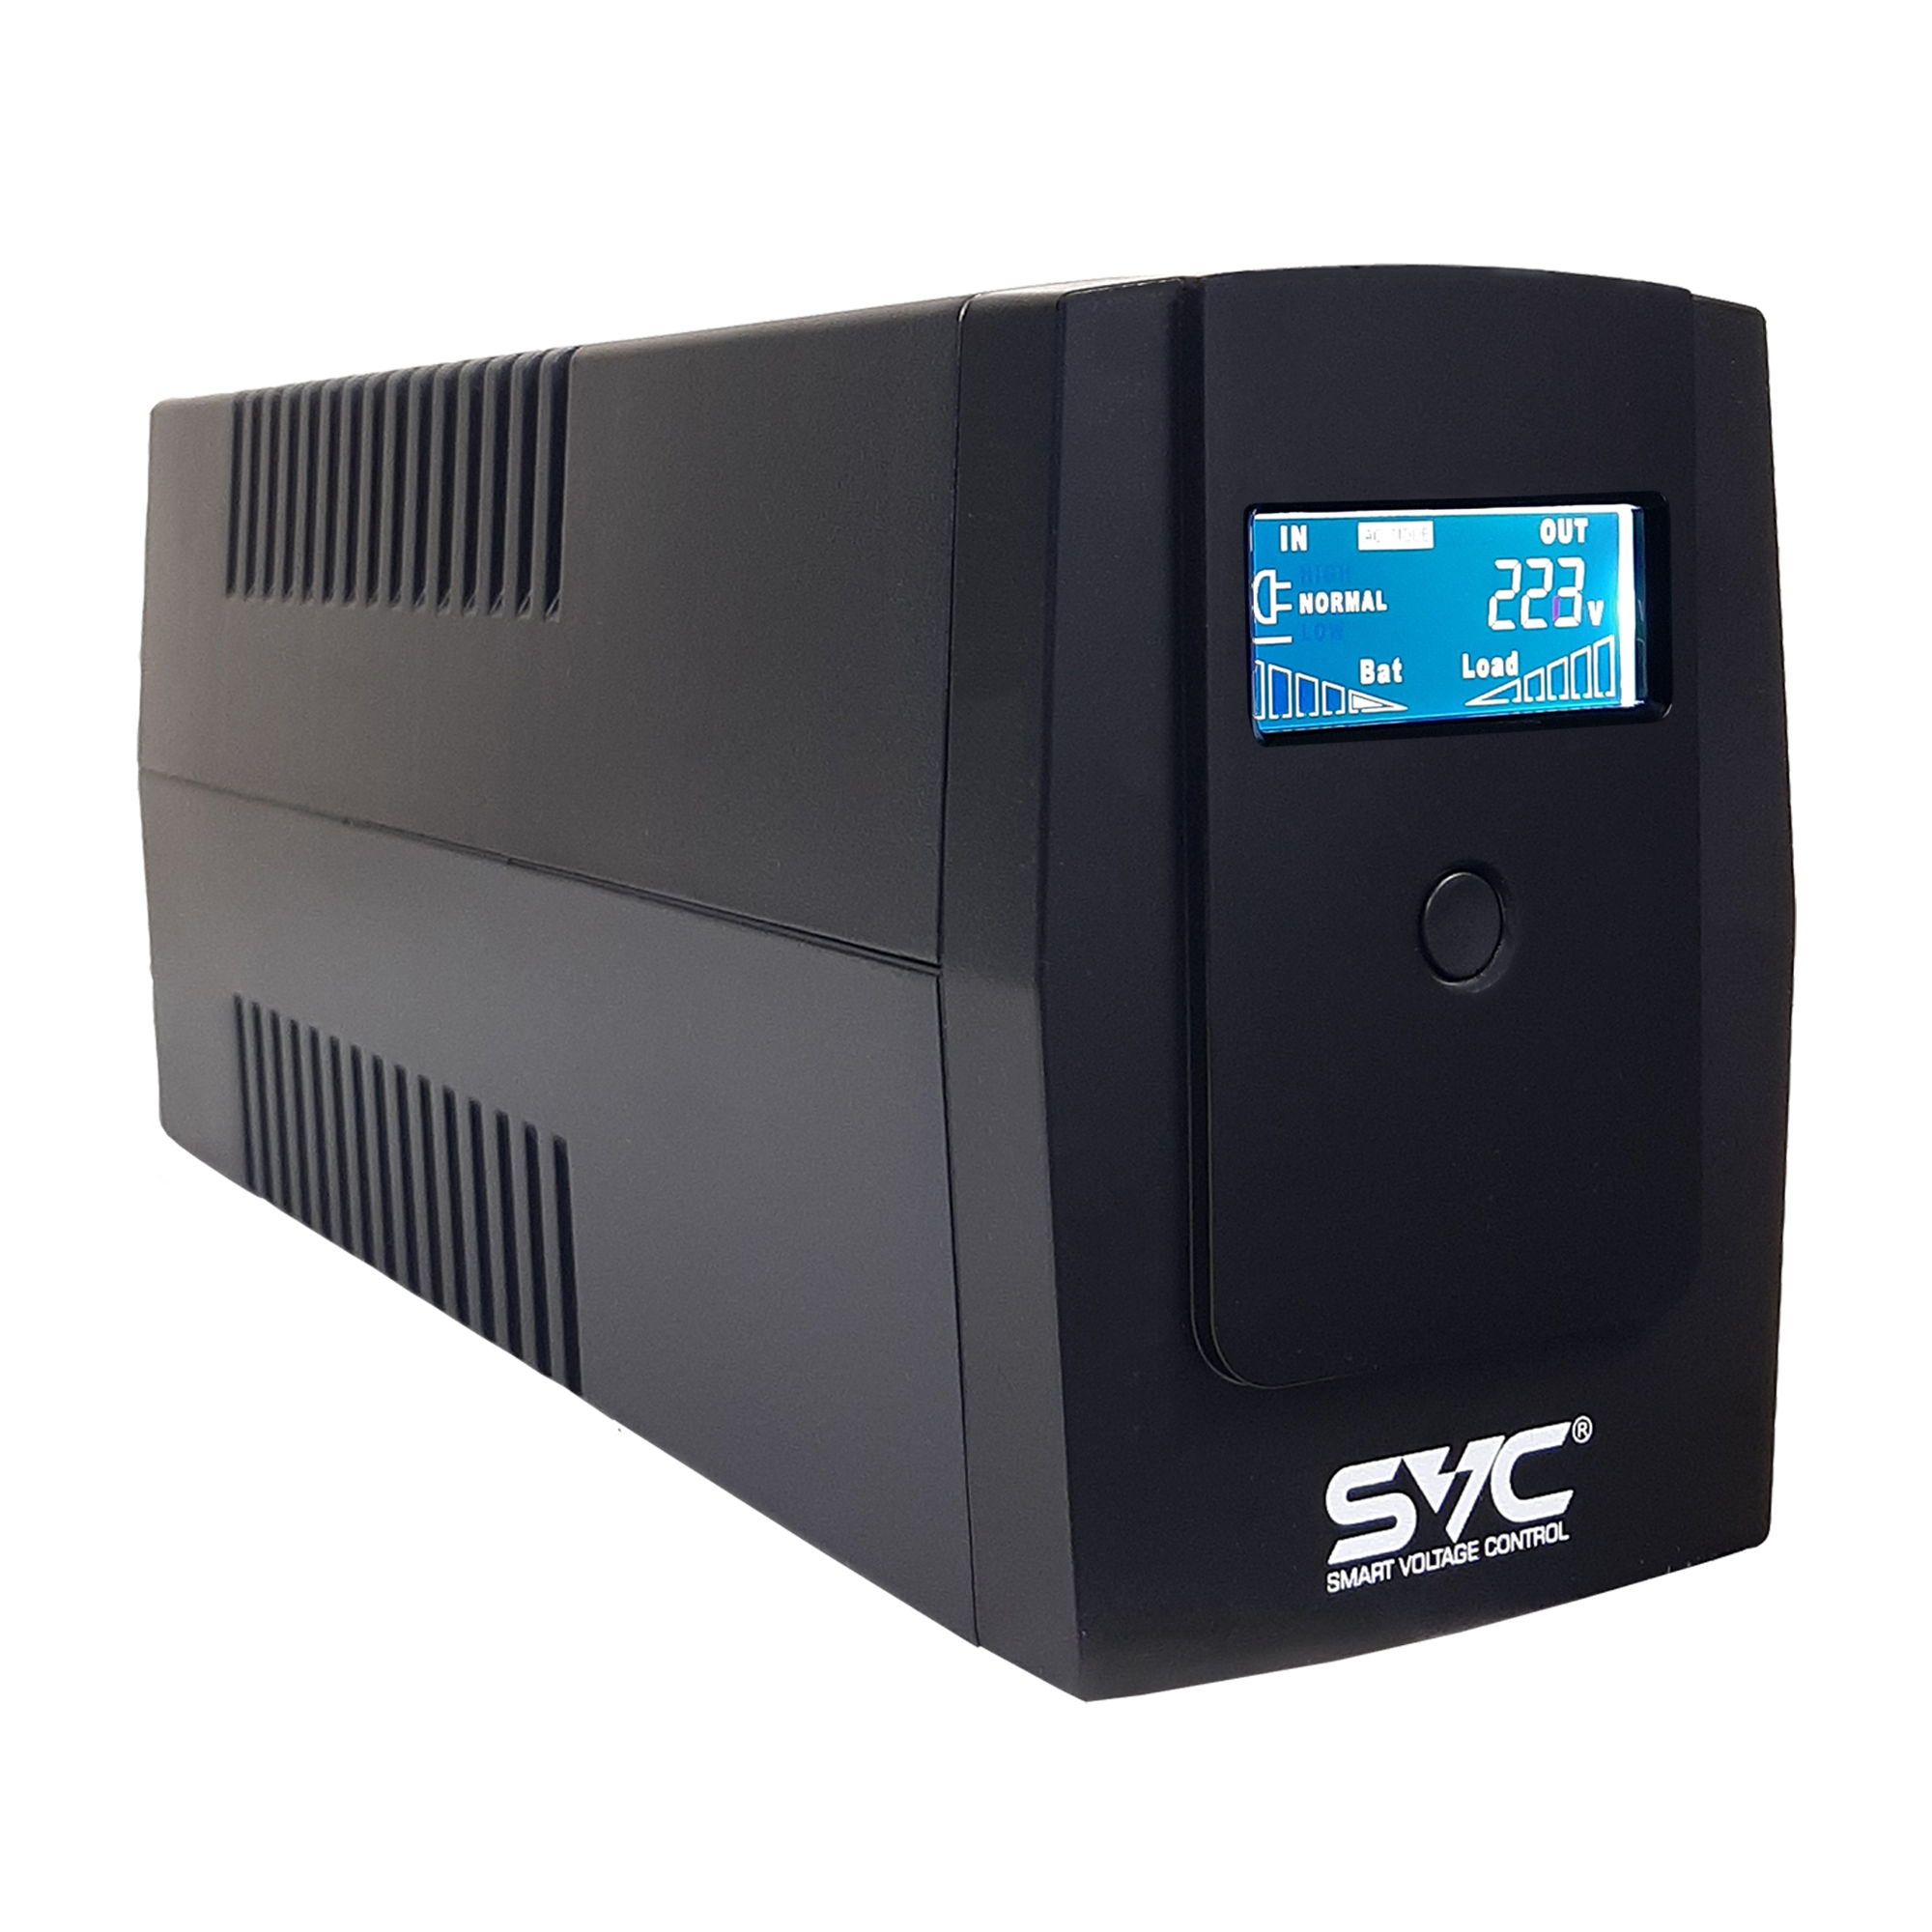 ИБП SVC V-650-R-LCD, 650VA, 390W, EURO, розеток - 2, USB, черный (V-650-R-LCD)